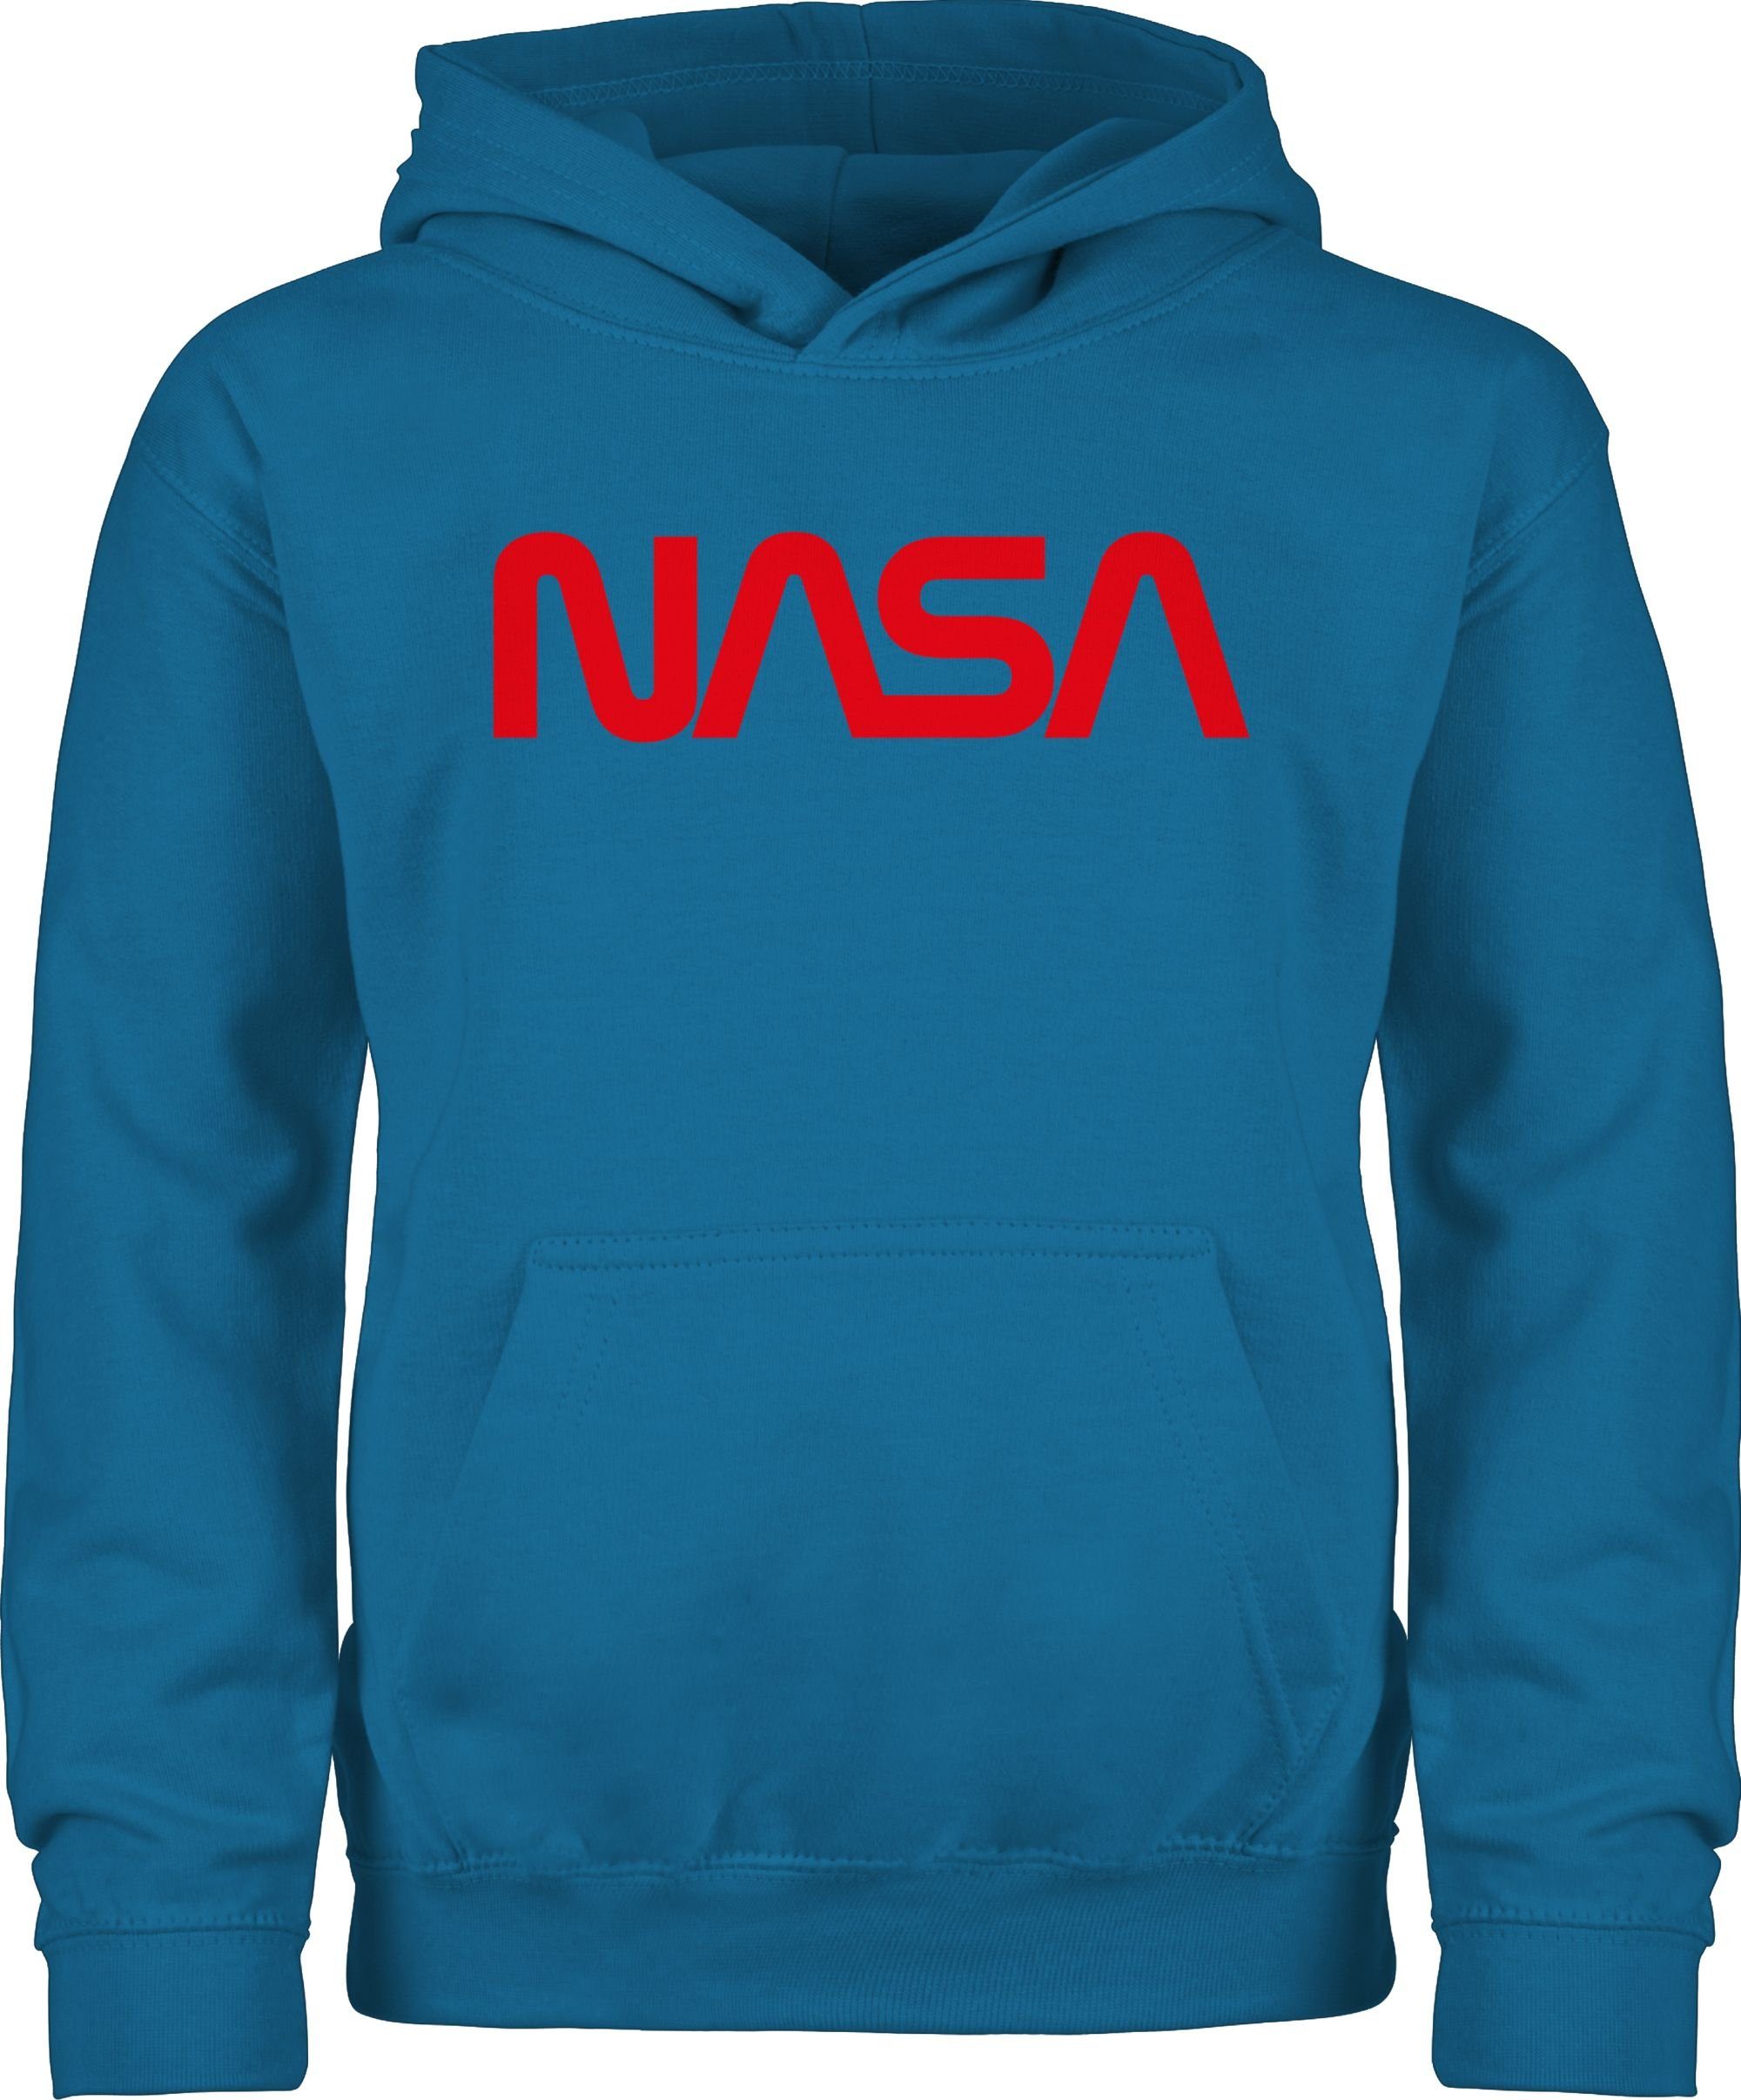 Shirtracer Hoodie Nasa - Raumfahrt Astronaut Mondlandung Weltraum Kinderkleidung und Co 1 Himmelblau